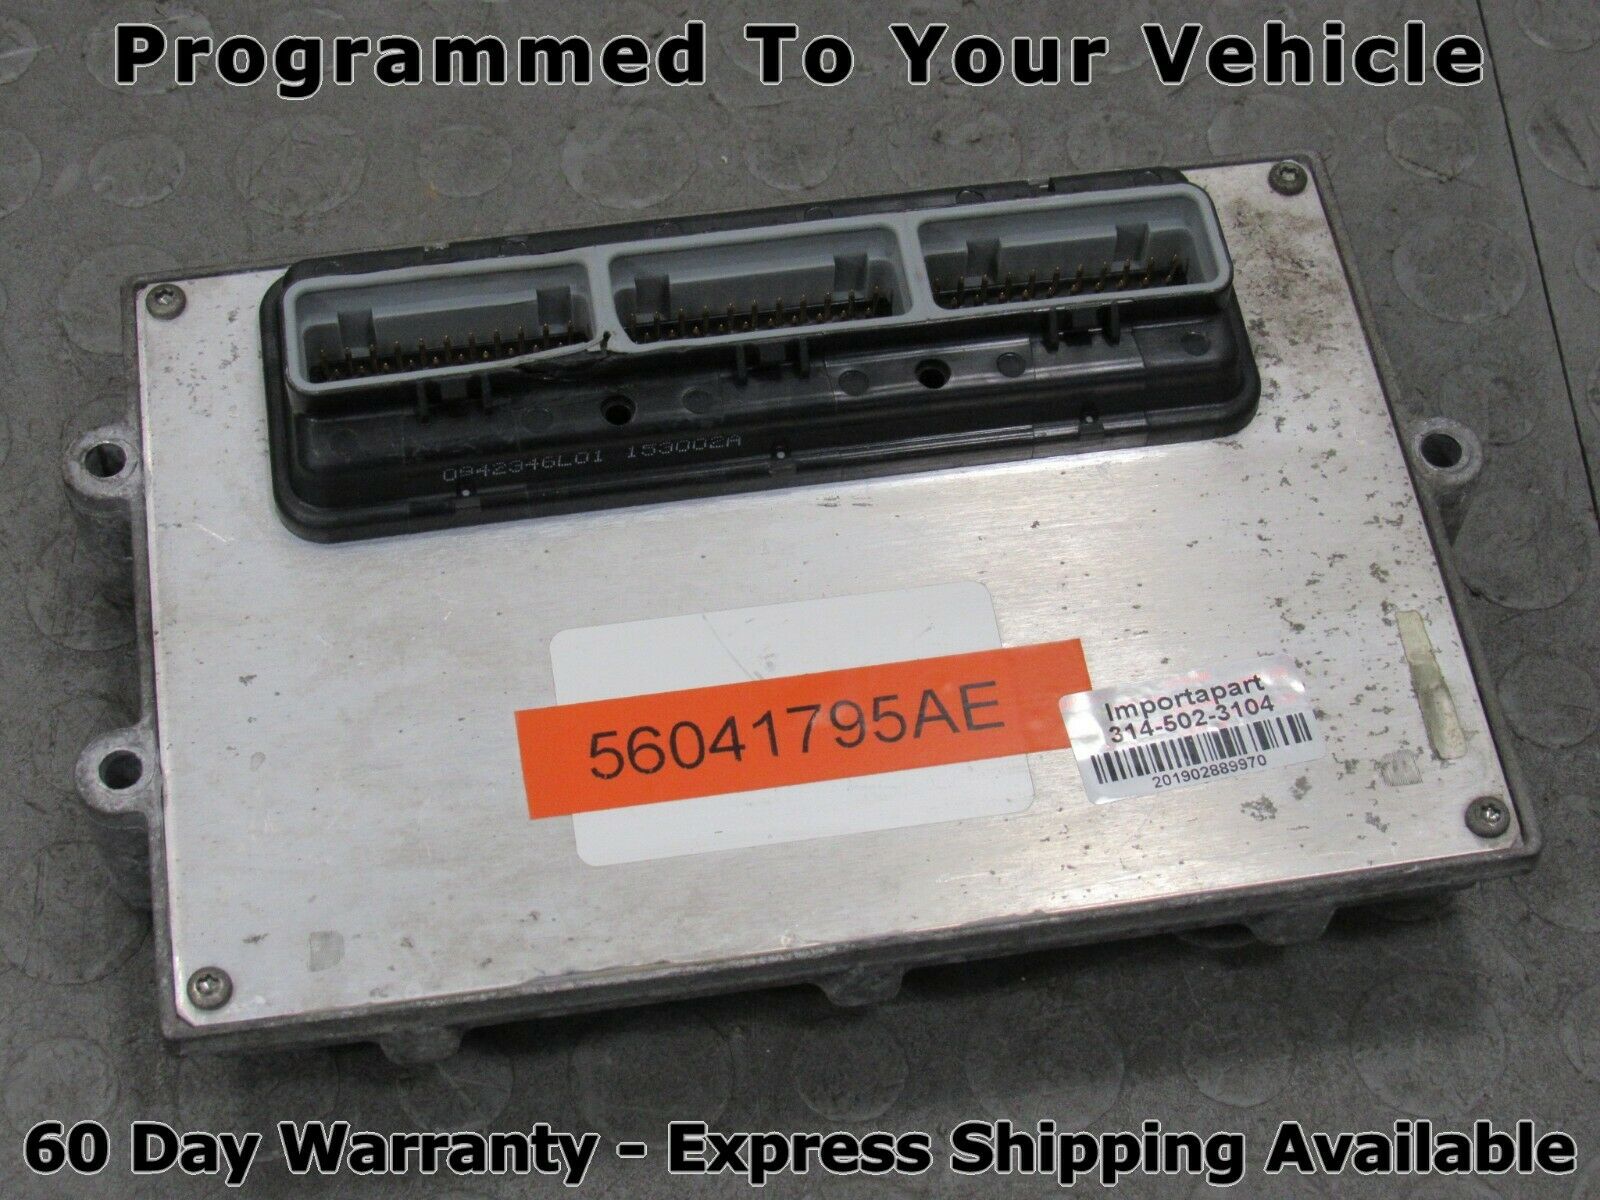 01 Jeep Cherokee XJ  MT ECU ECM PCM Engine Computer 56041795AE 795 PROG  9970 – Importapart